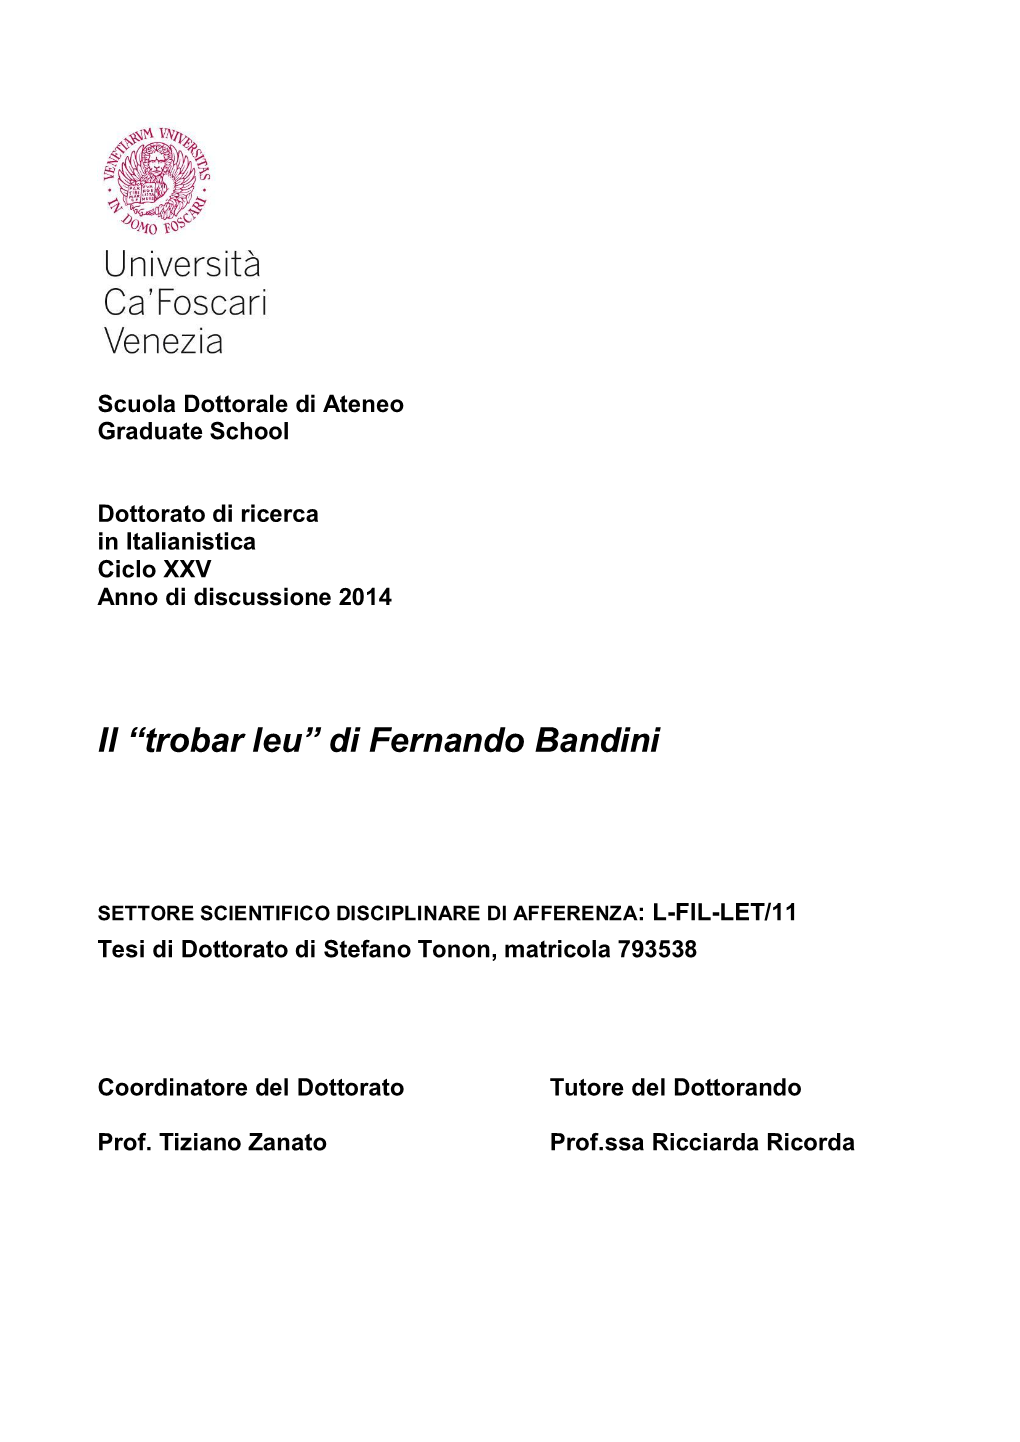 Il “Trobar Leu” Di Fernando Bandini